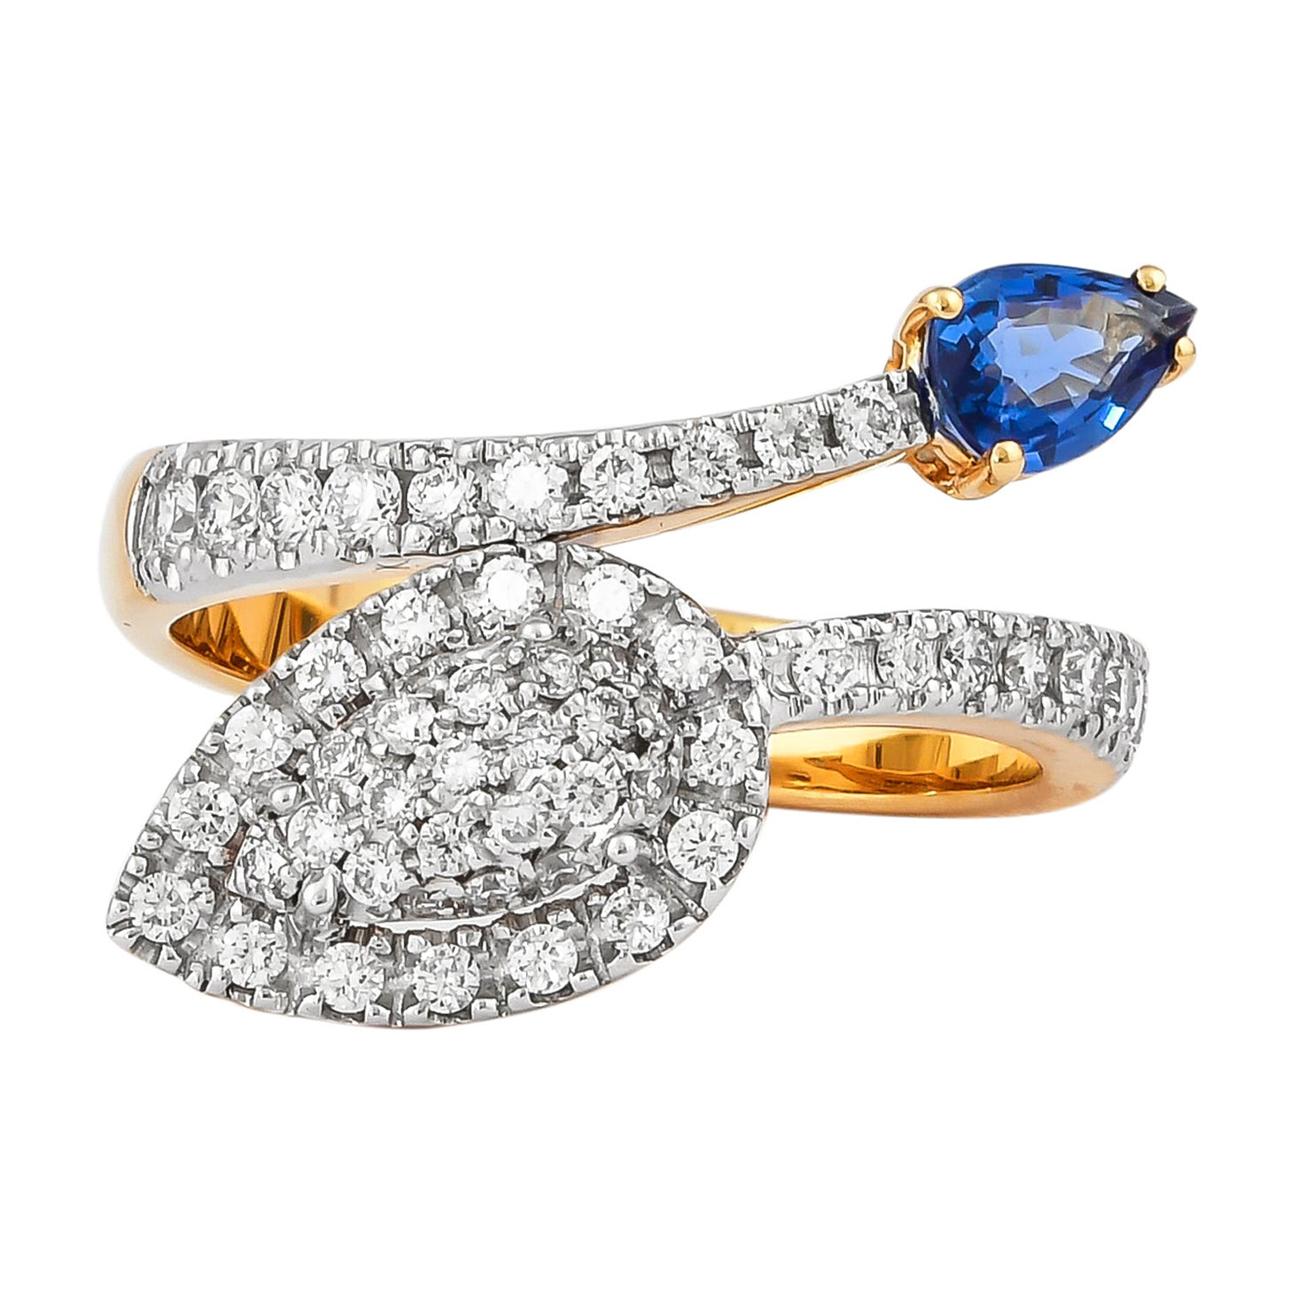 Bague en or jaune 18 carats avec saphir bleu 0,55 carat et diamants